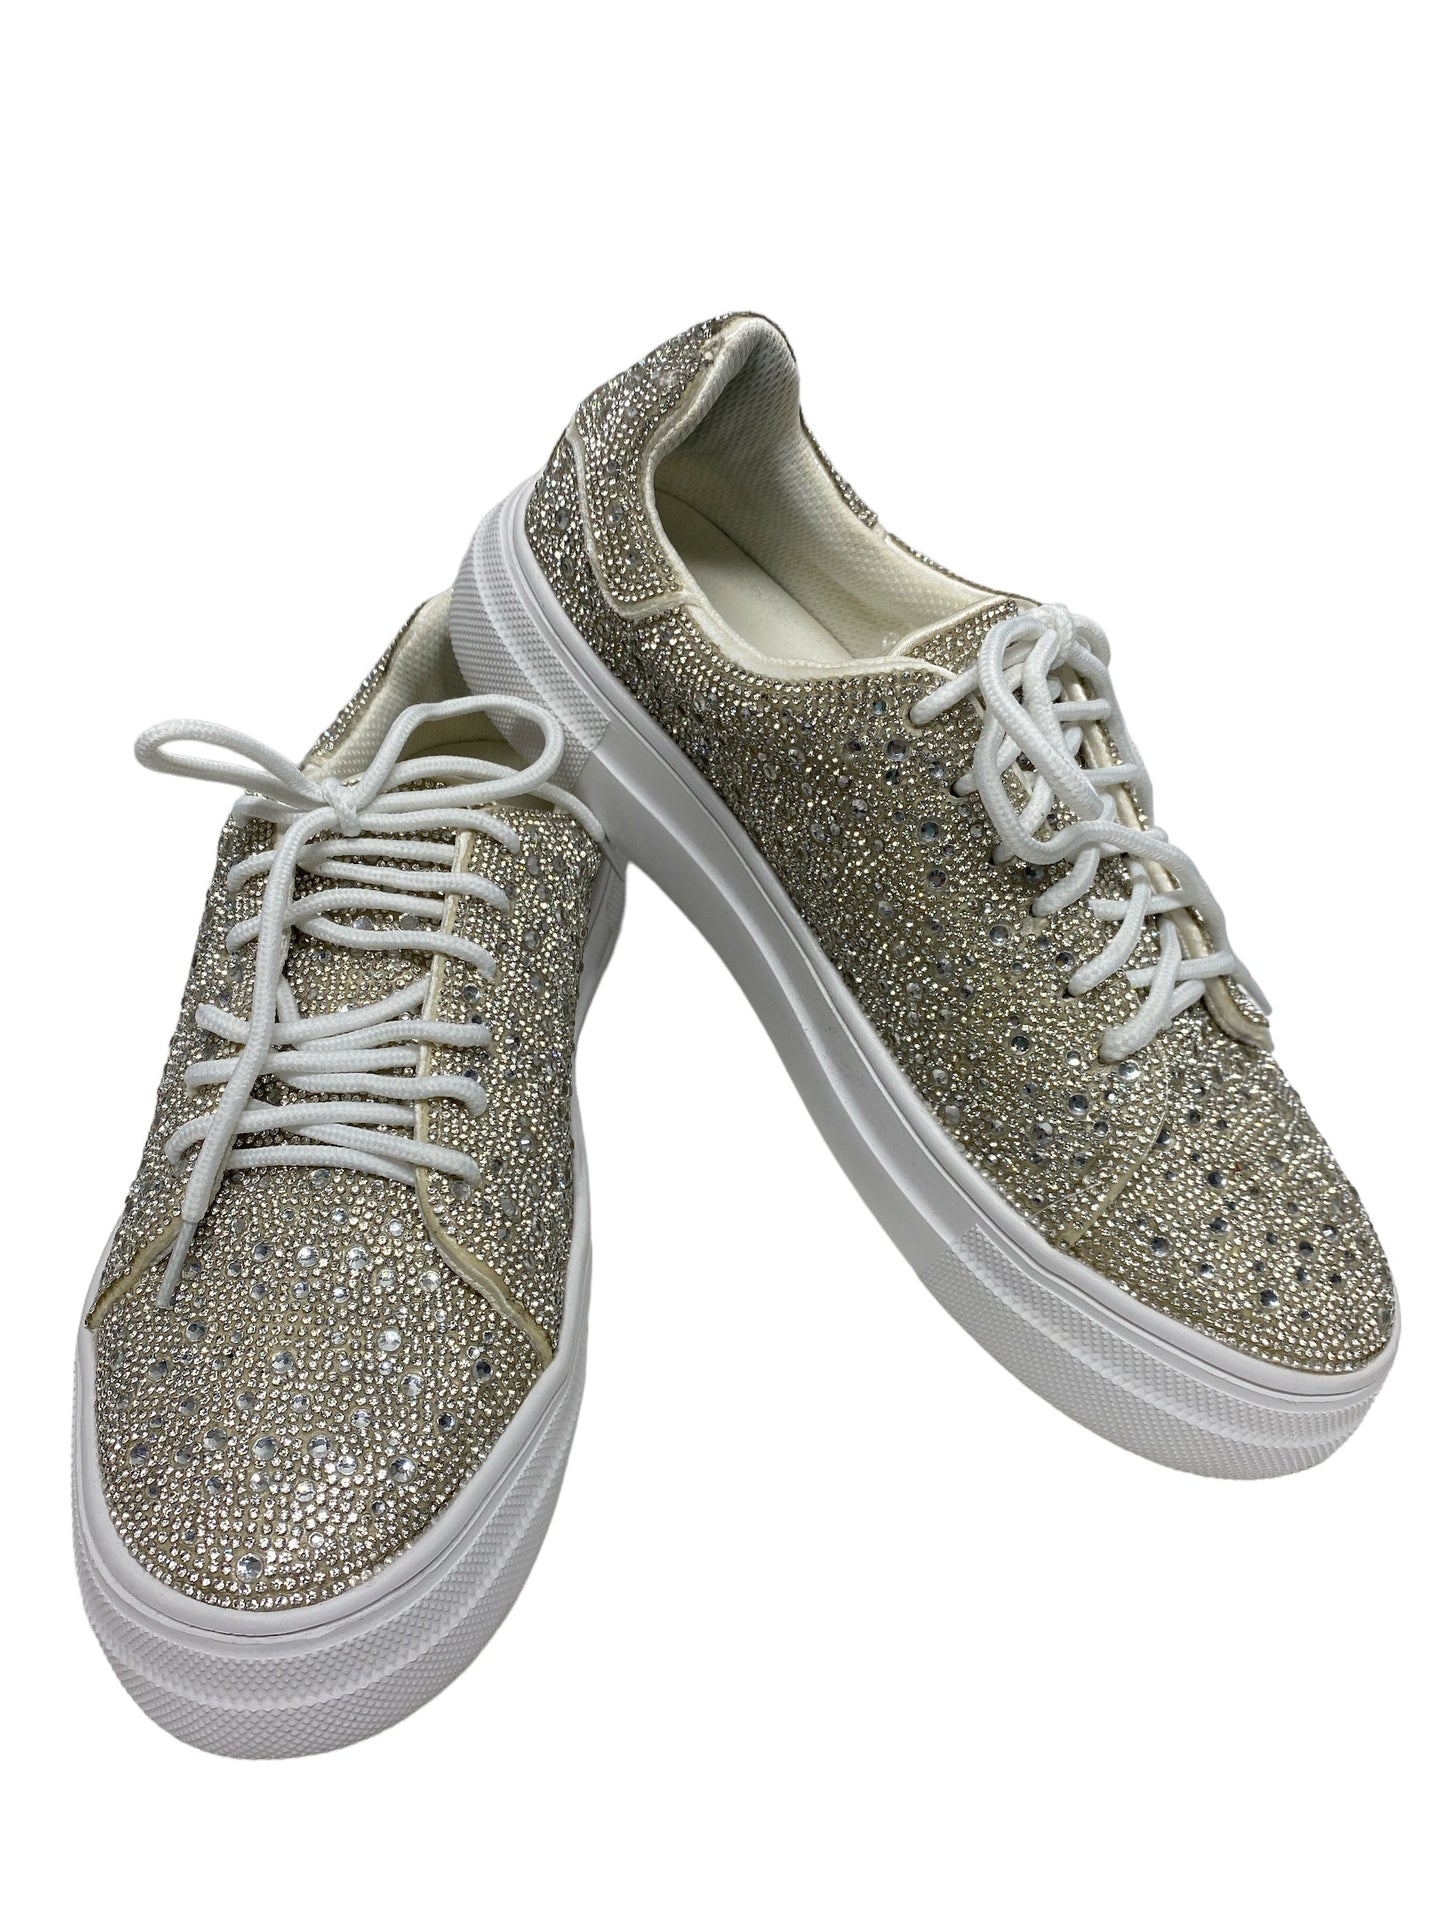 Silver & Tan Shoes Sneakers Corkys, Size 10